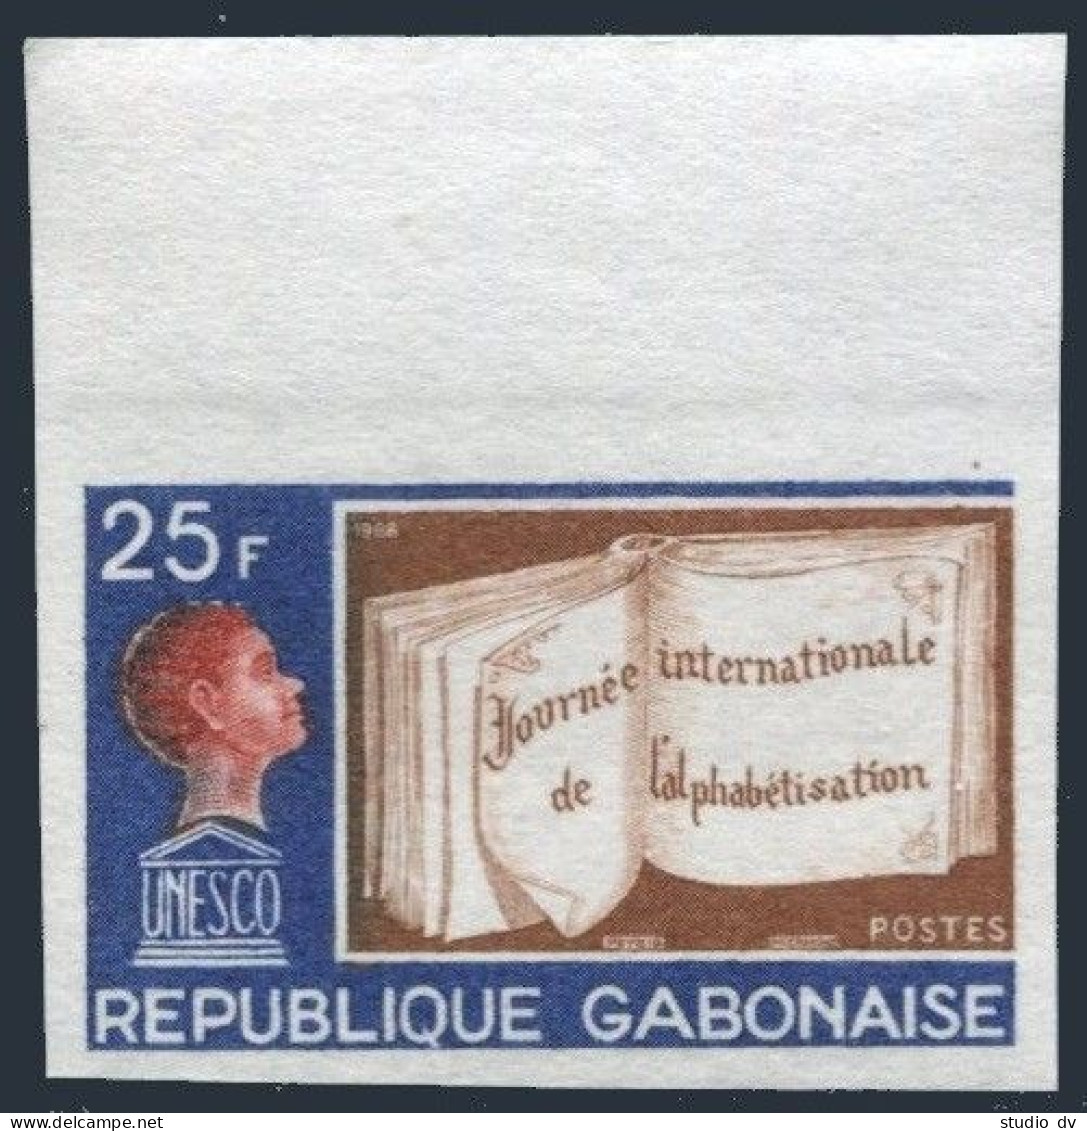 Gabon 231 Imperf,MNH.Michel 312B. Literacy Year ILY-1968.Open Book,child,UNESCO. - Gabon